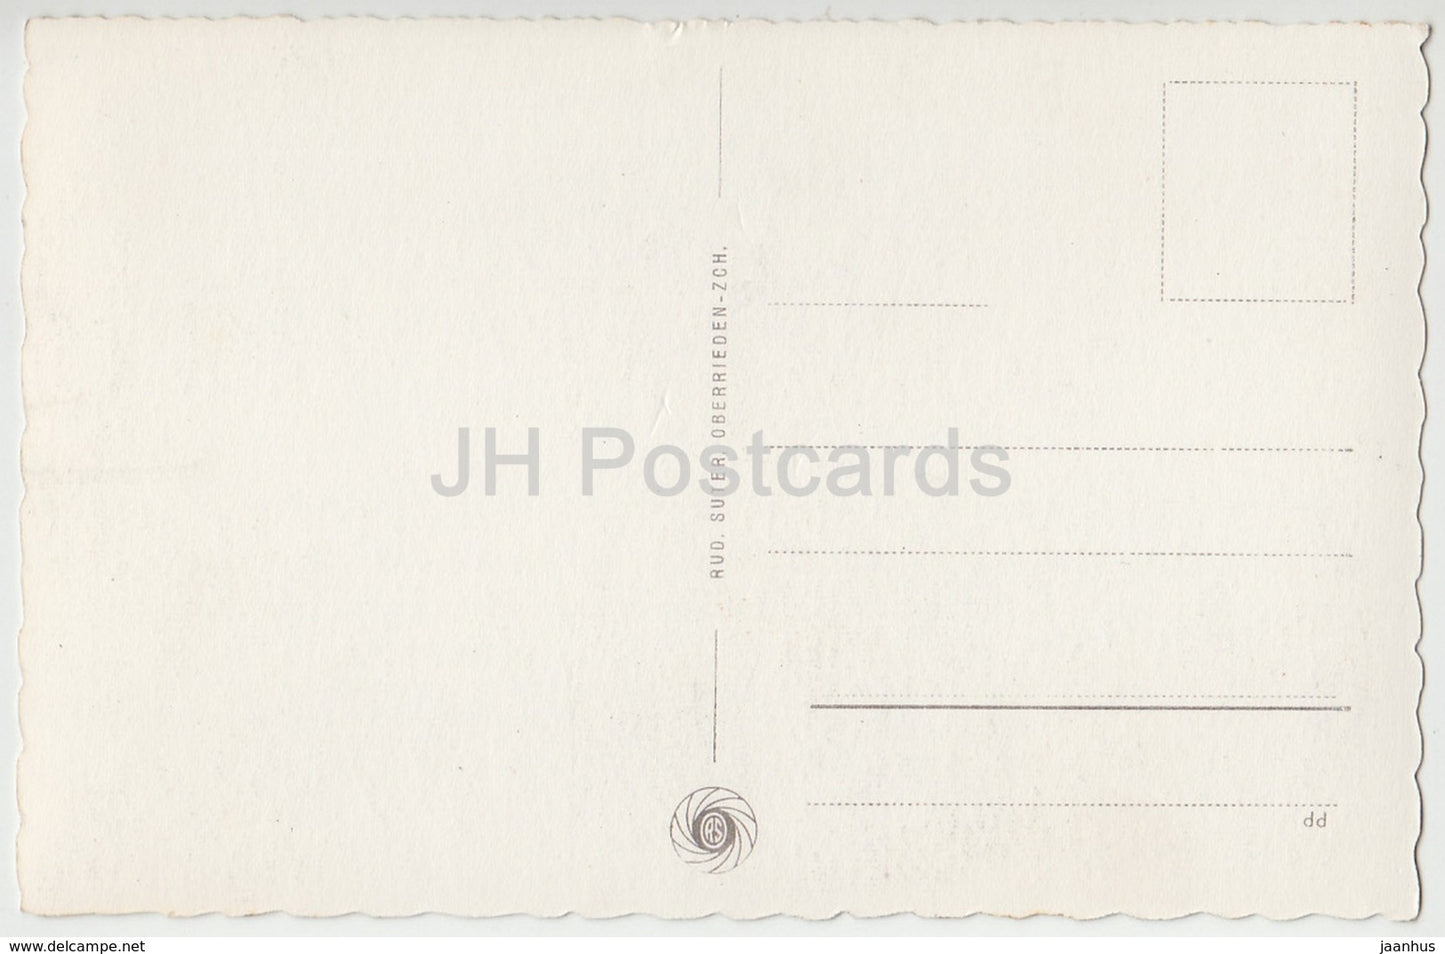 Furkastrasse mit Galenstock - 9230 - Switzerland - old postcard - unused